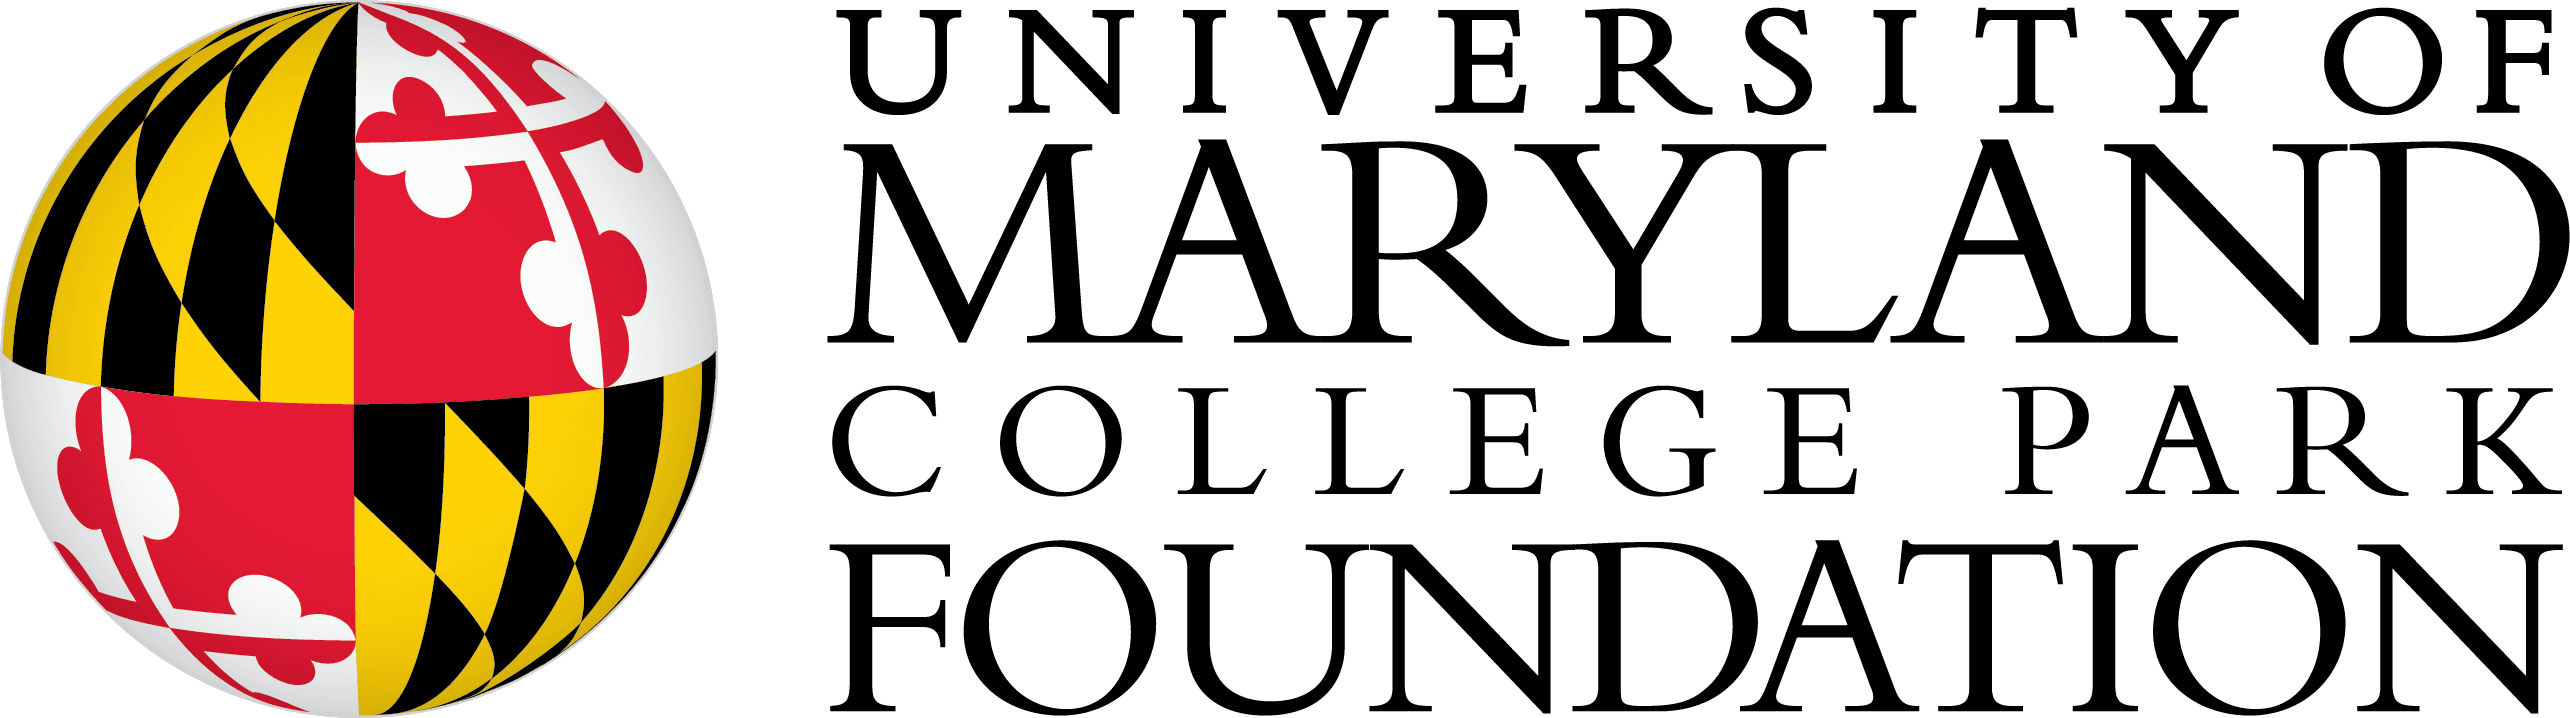 University of Maryland College Park Foundation